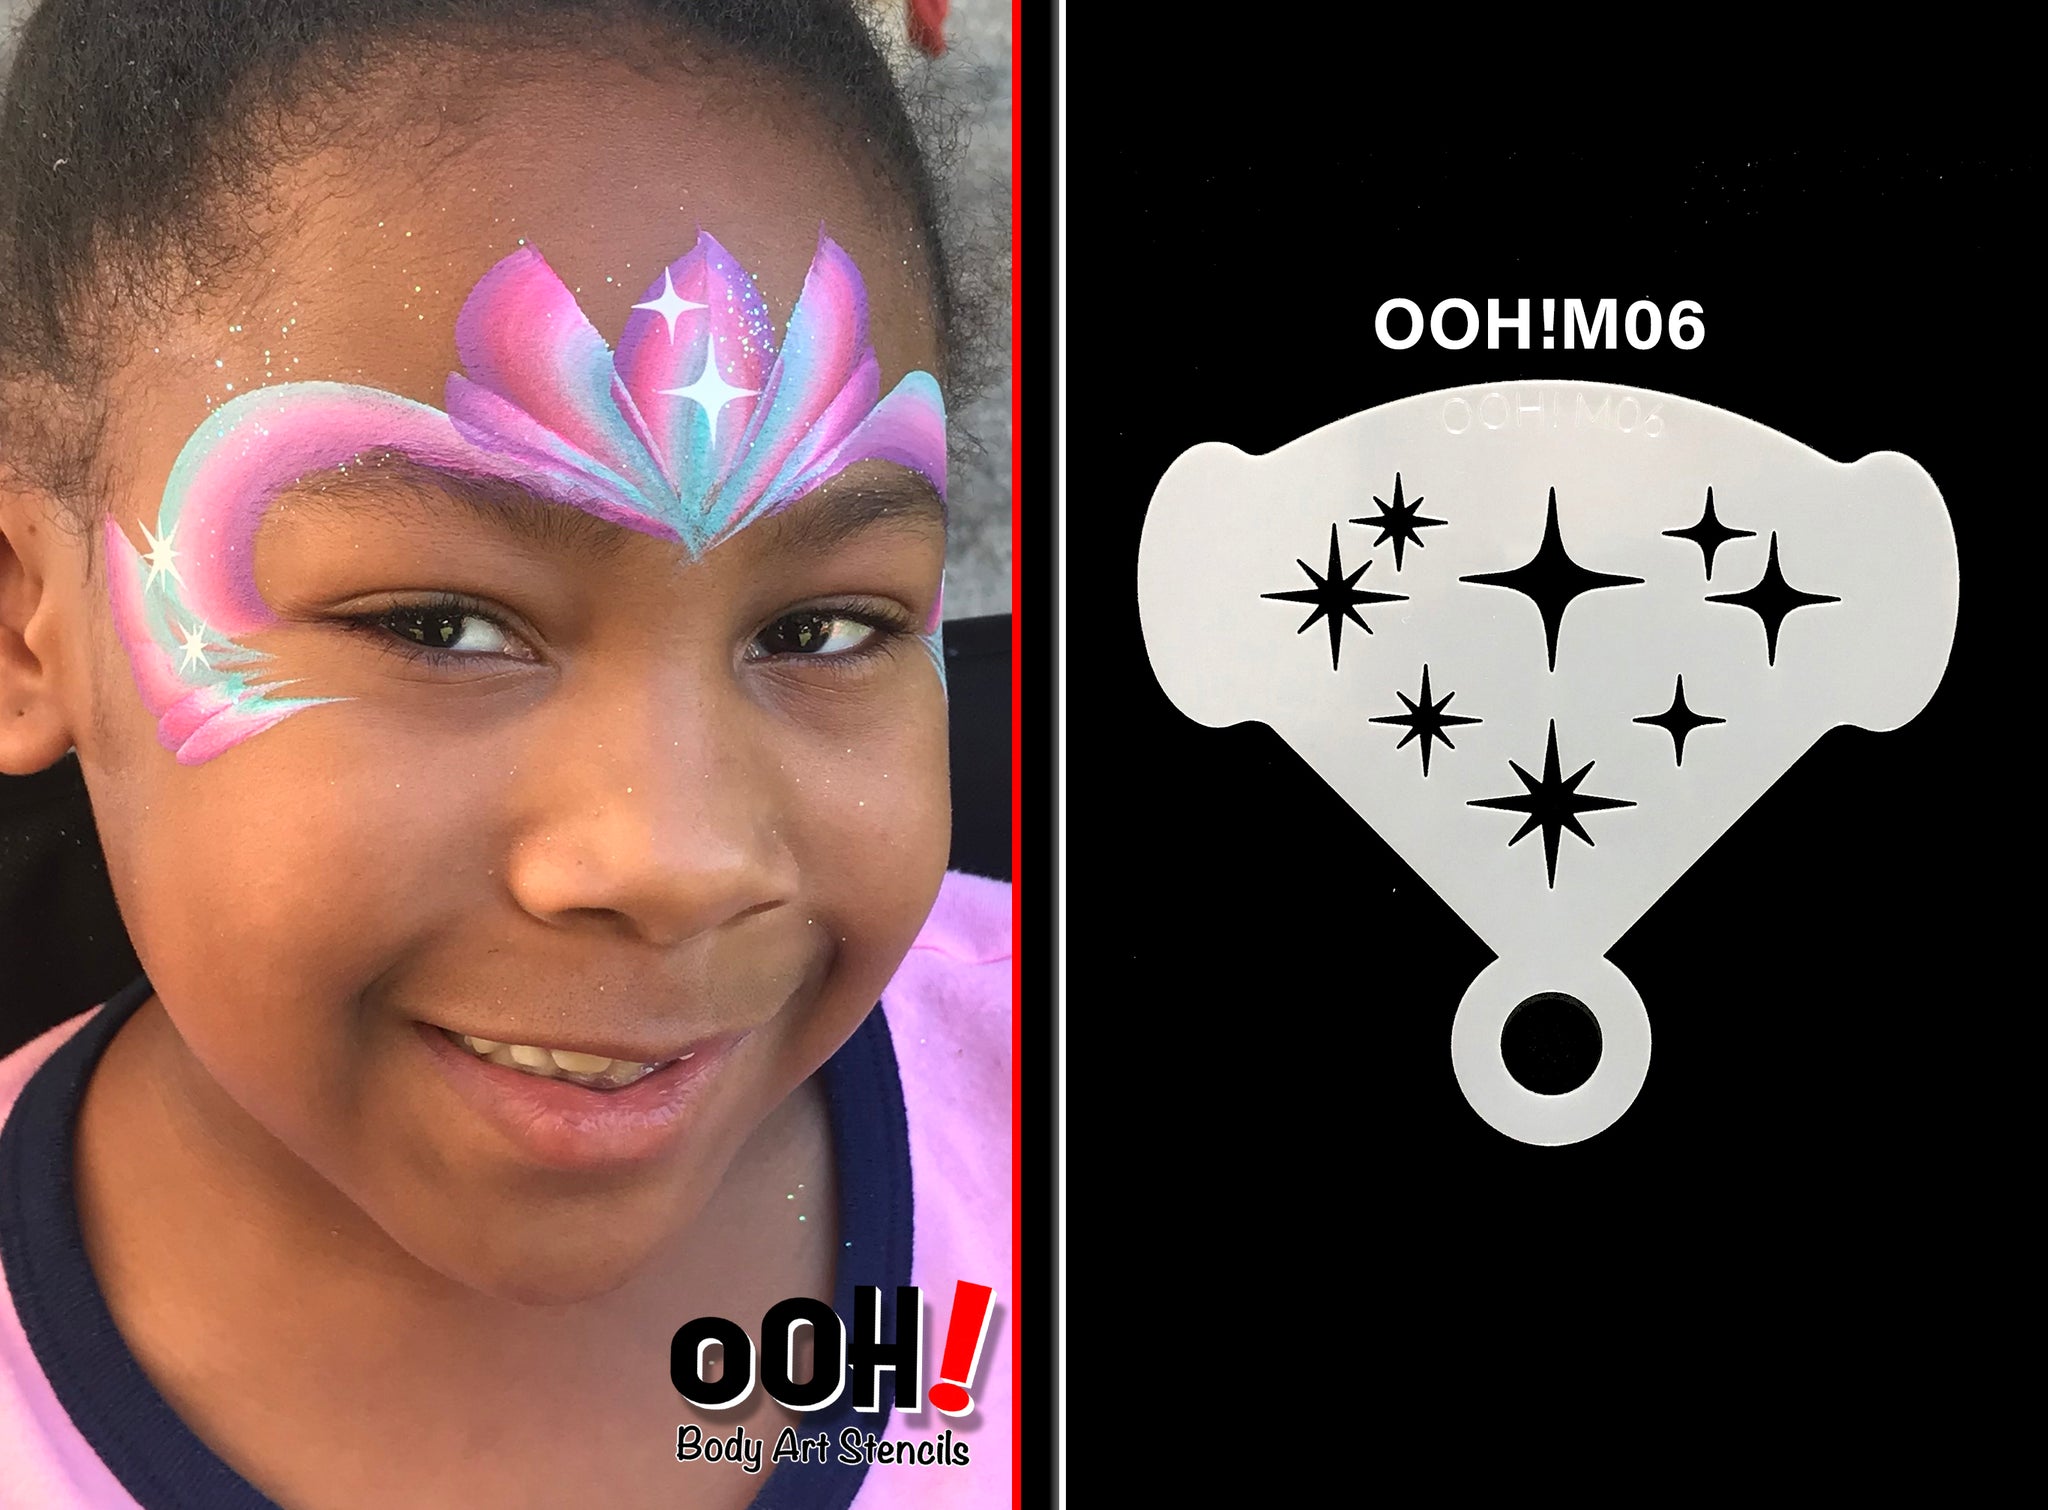 M06 Twinkle Star Mirror Face Paint Stencil – Ooh! Body Art Stencils